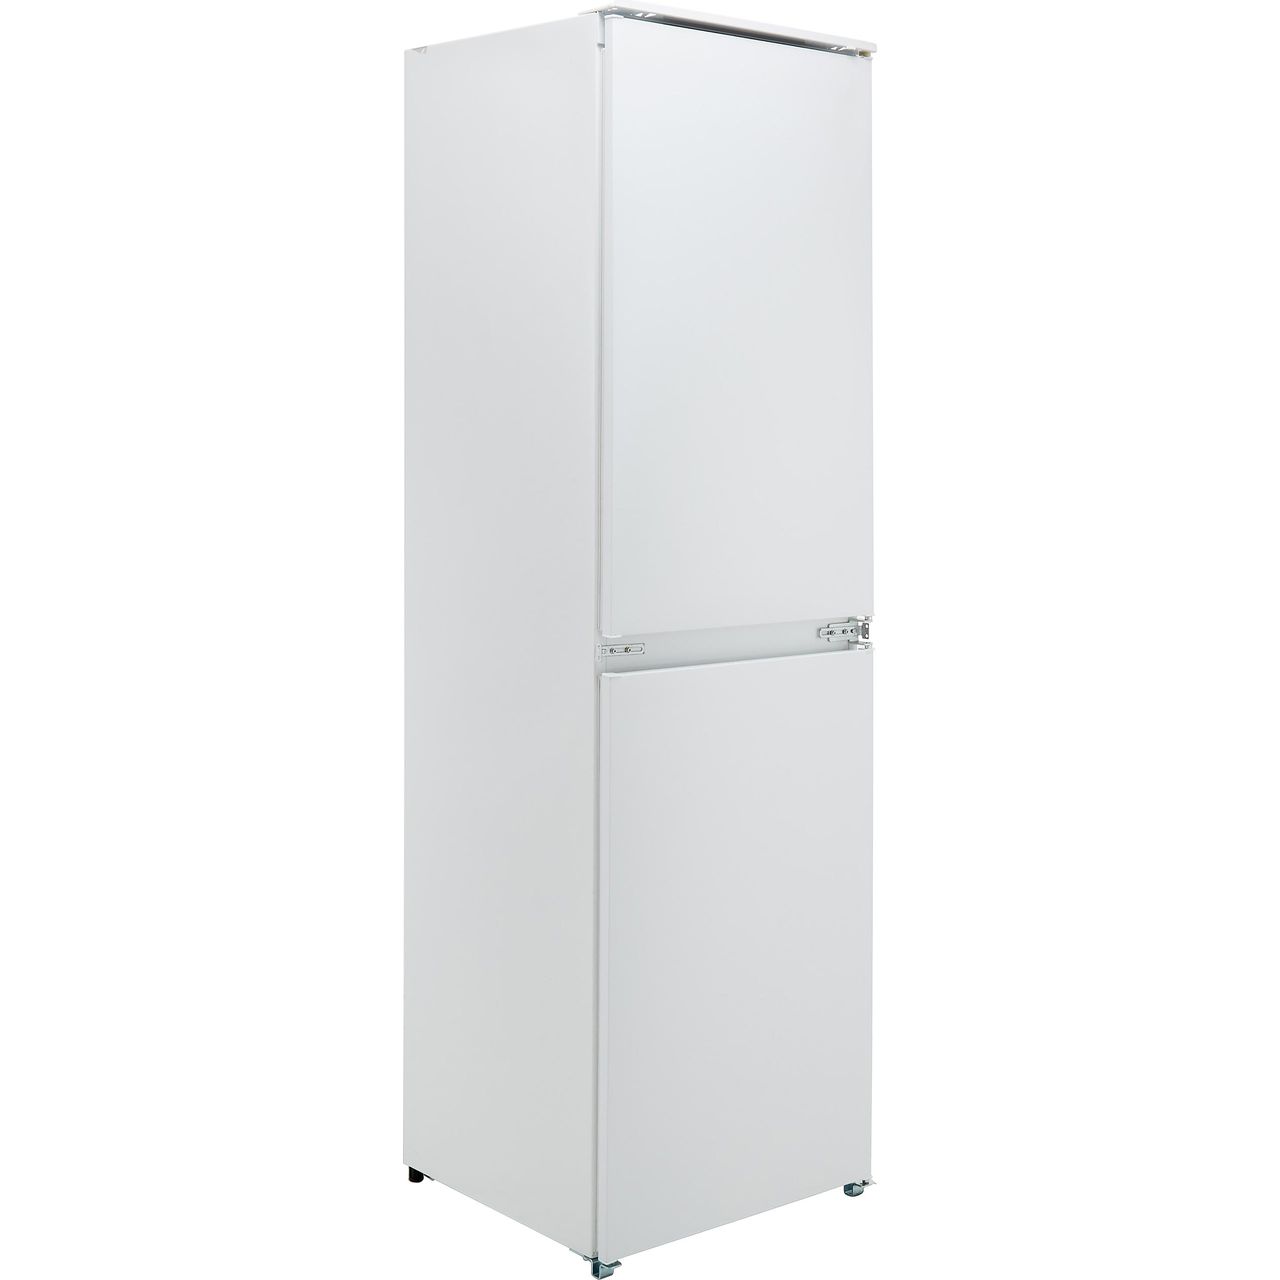 Zanussi ZBB27650SV Integrated 50/50 Frost Free Fridge Freezer with Sliding Door Fixing Kit Review